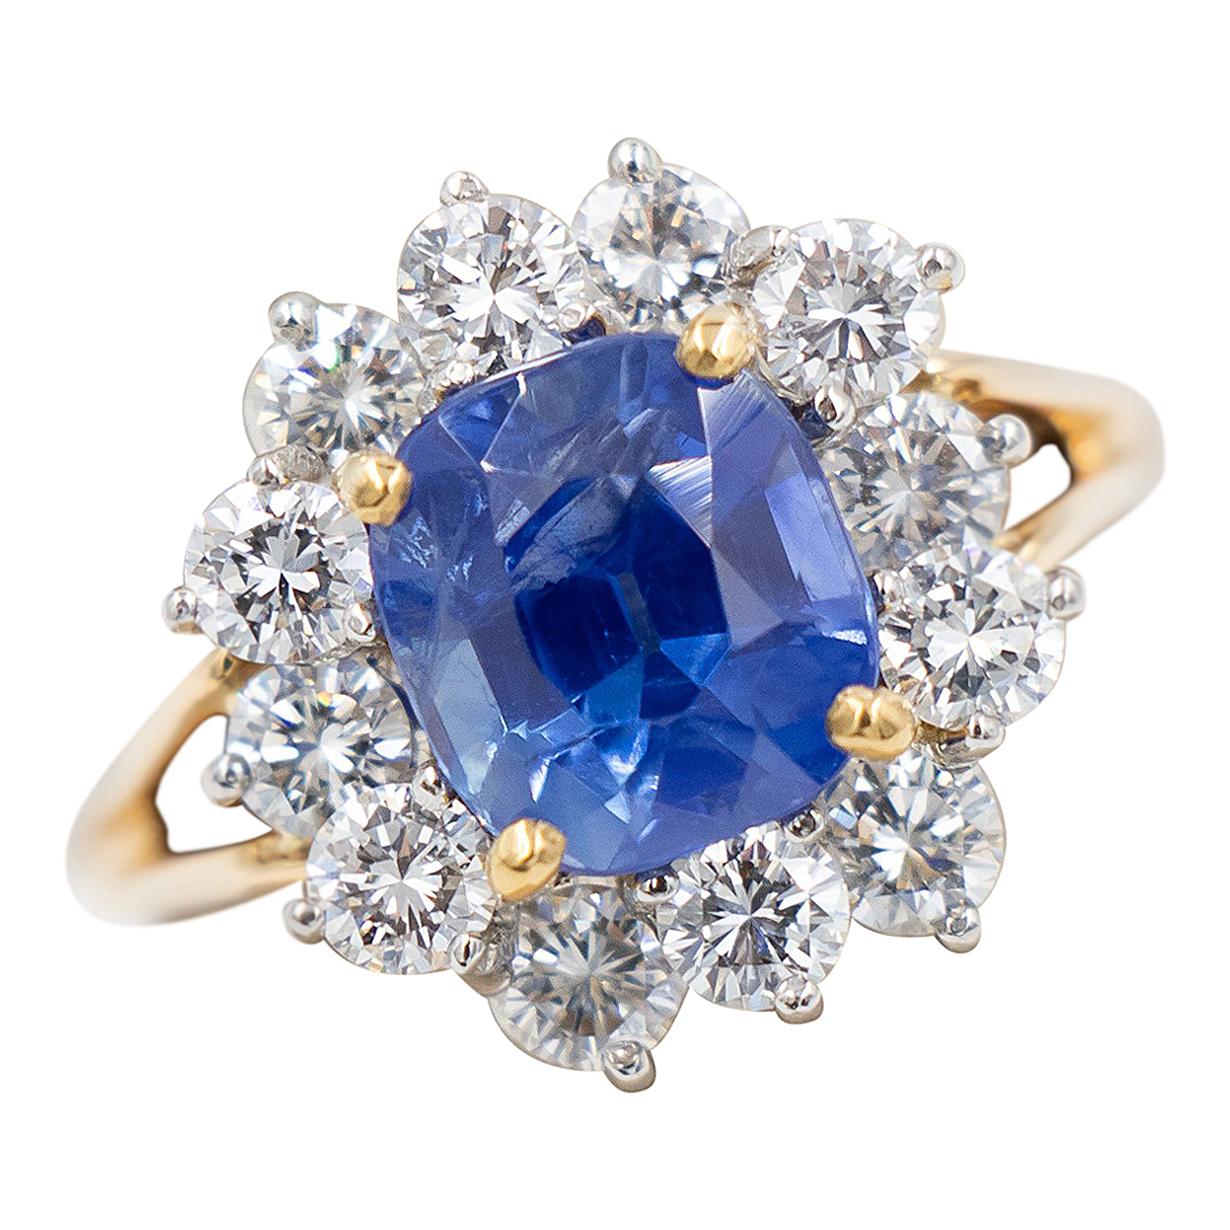 Kashmir Blue Sapphire 3.46 Carat set in Oscar Heyman Mounting